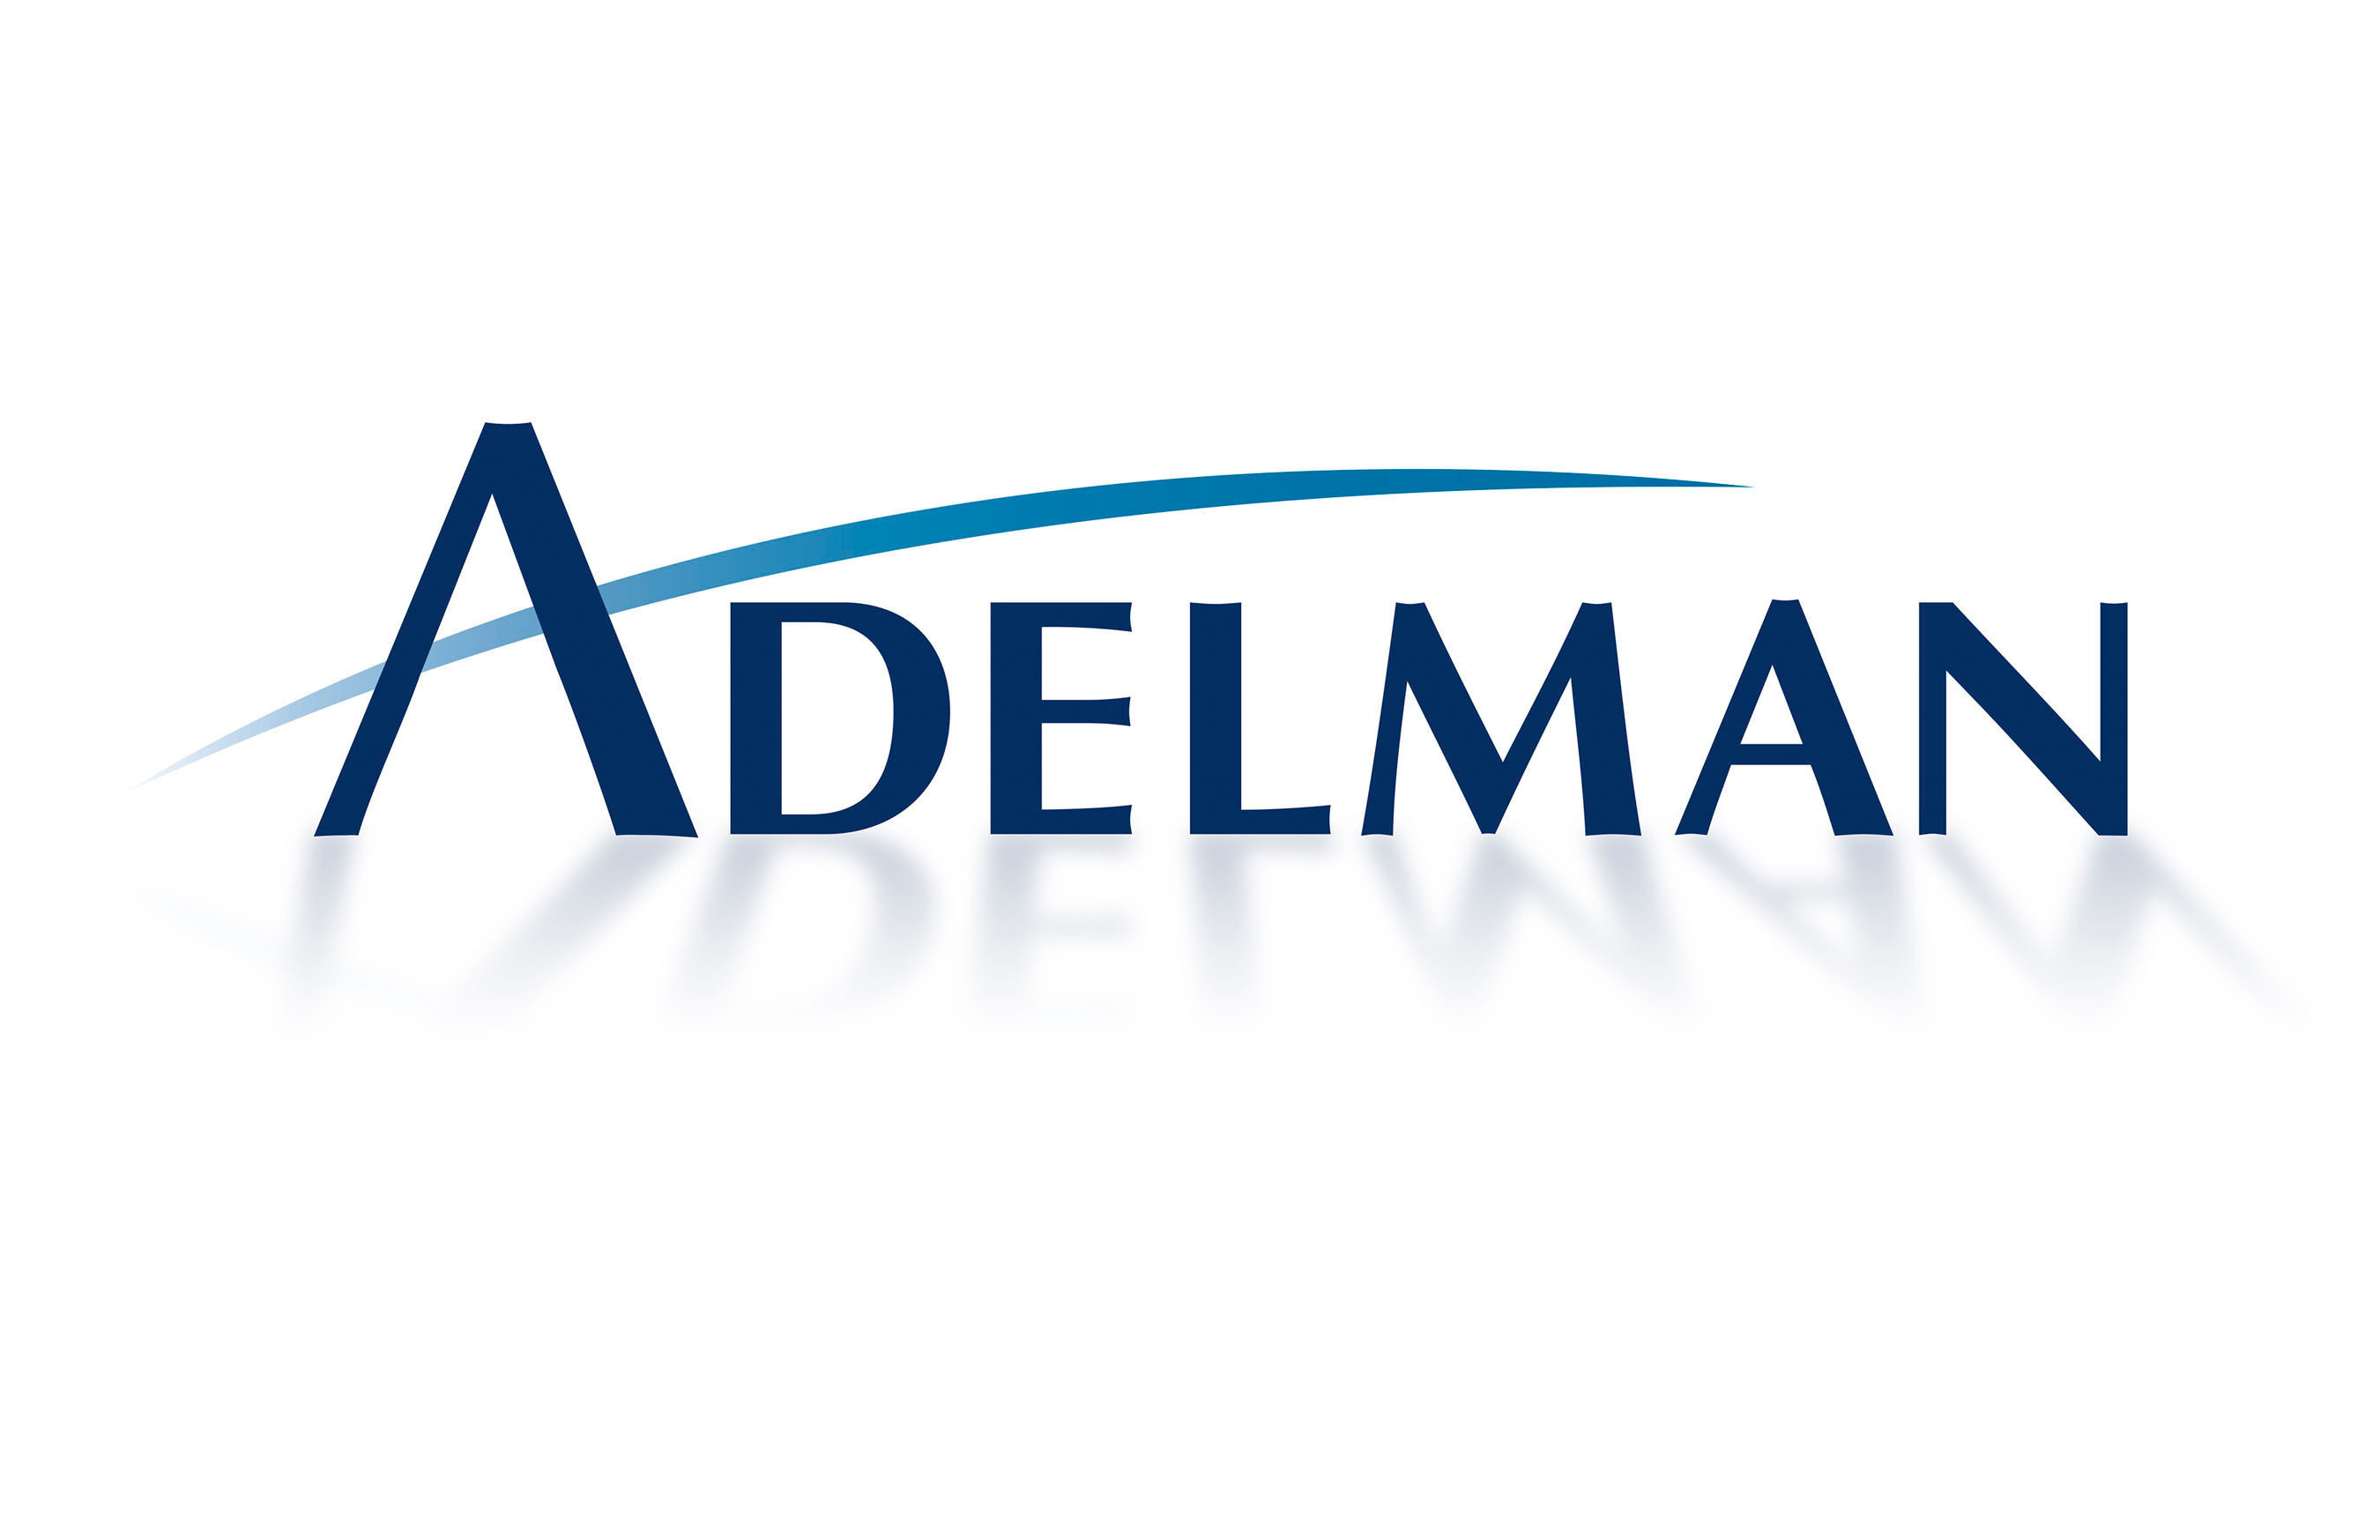 Adelman Travel Logo. (PRNewsFoto/Adelman Travel) (PRNewsFoto/ADELMAN TRAVEL)